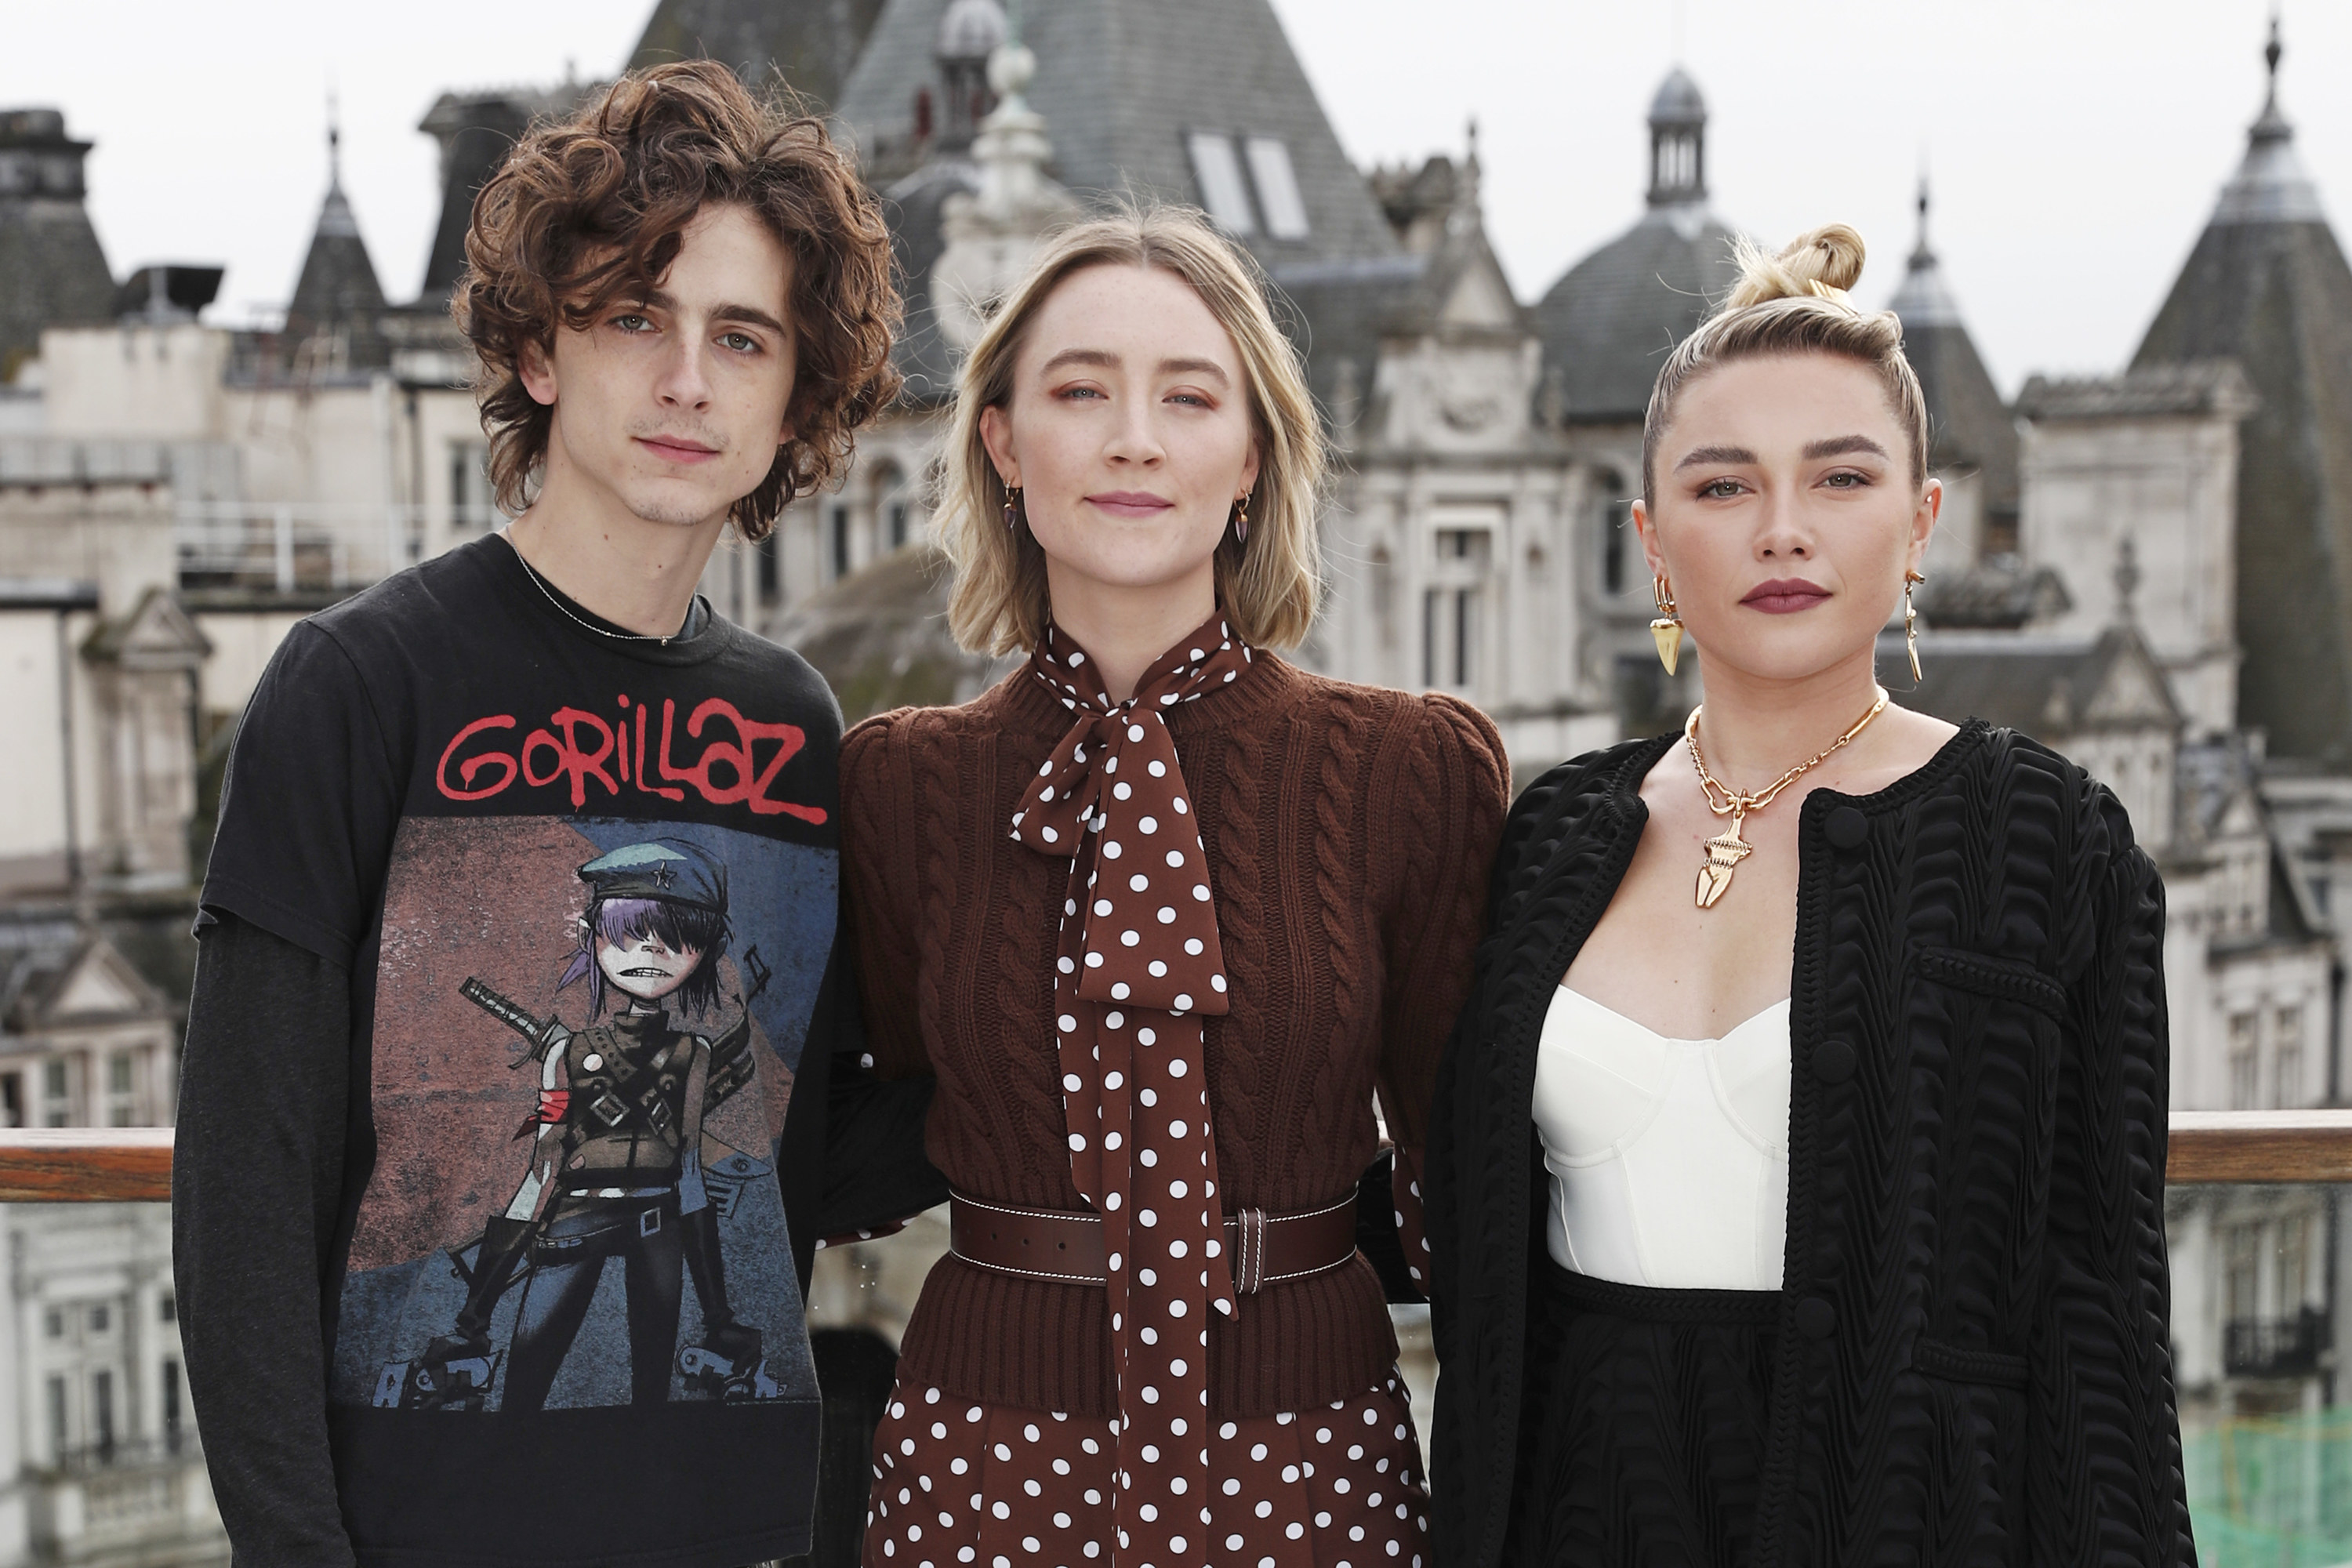 Timothée Chalamet, Saoirse Ronan, and Florence Pugh stand together against the backdrop of an elegant, castlelike building